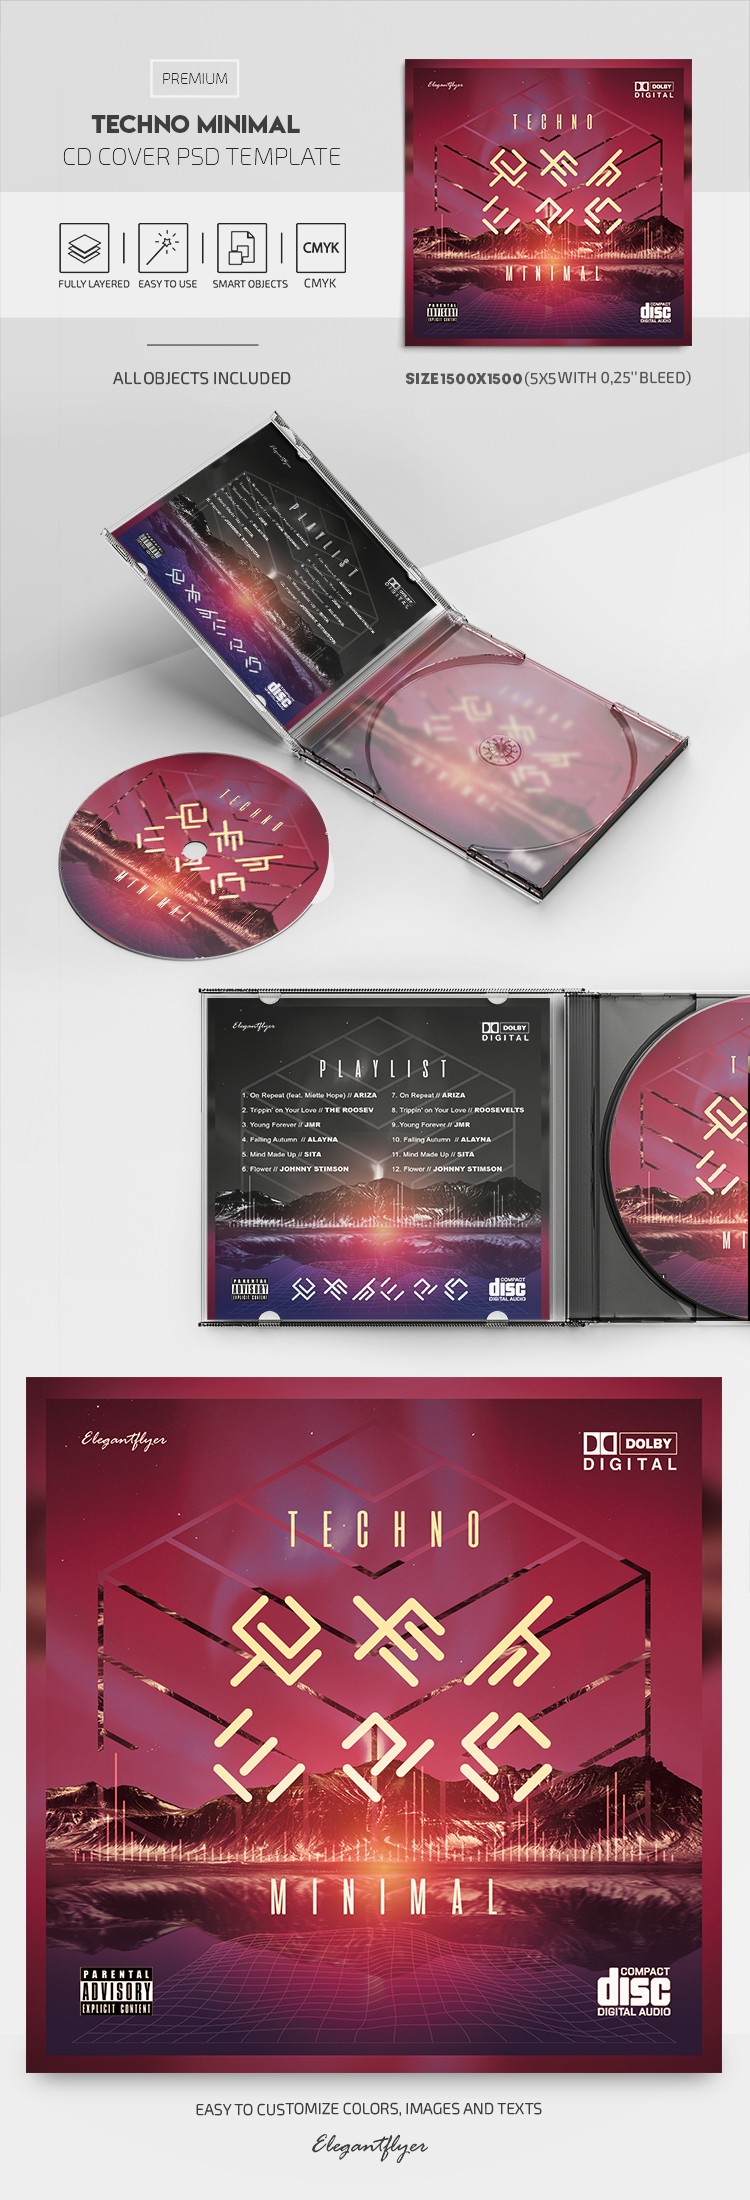 Couverture de CD Techno Minimal by ElegantFlyer